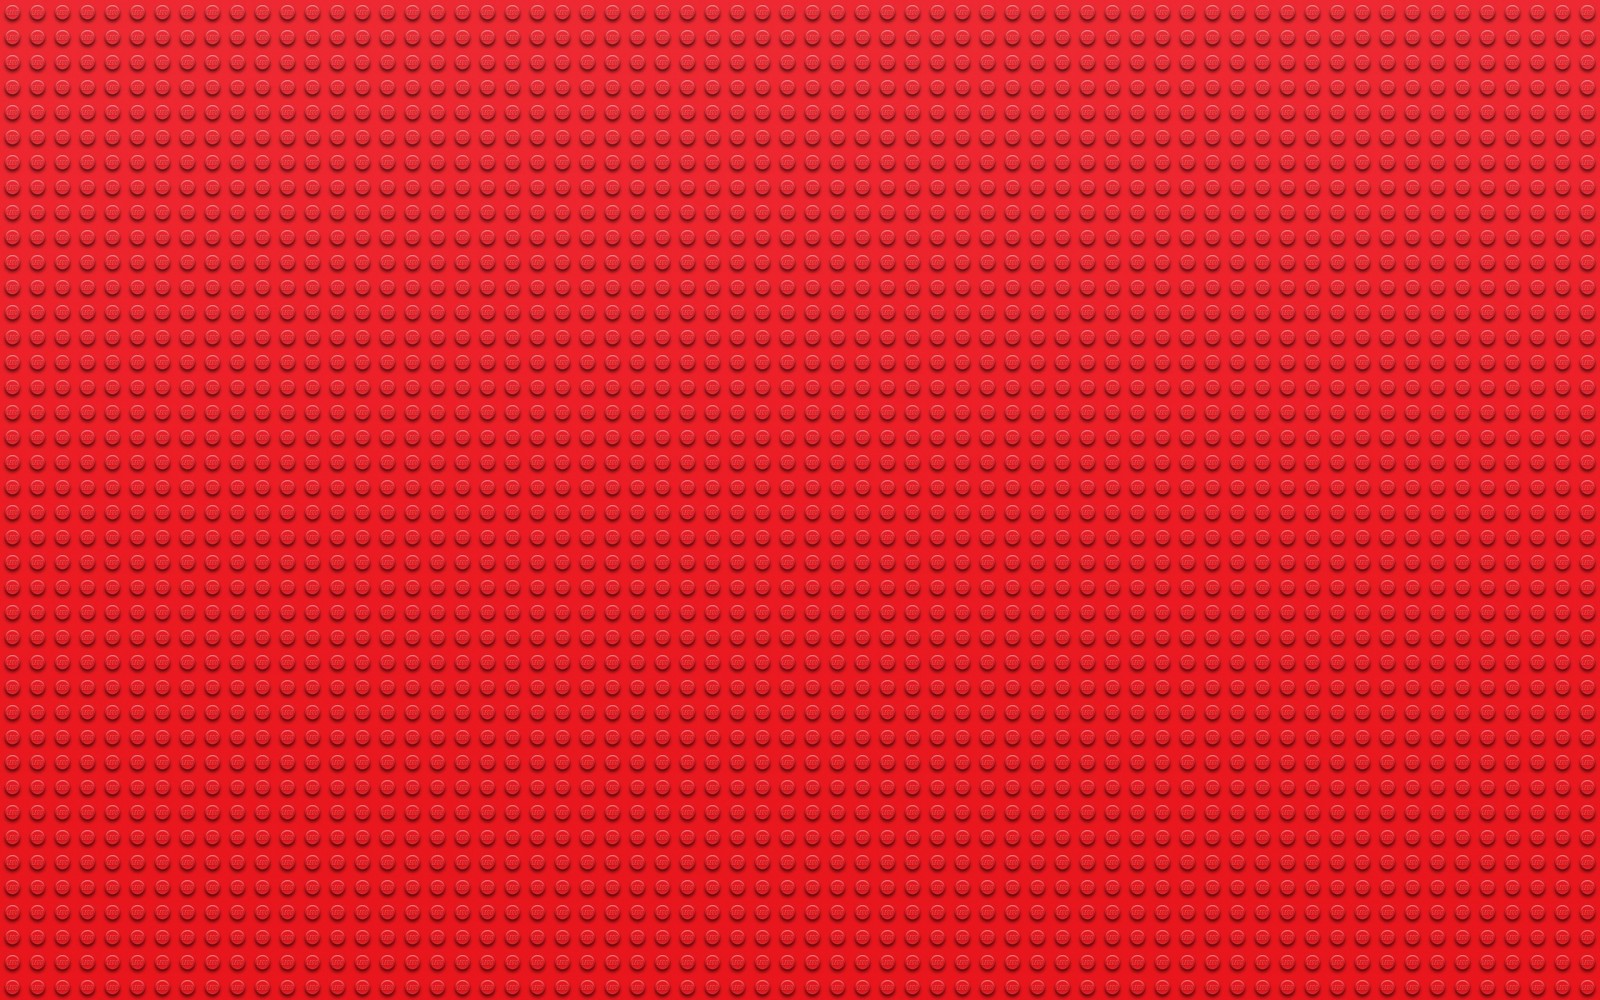 lego_points_circles_red-773282.jpg!d.jpg